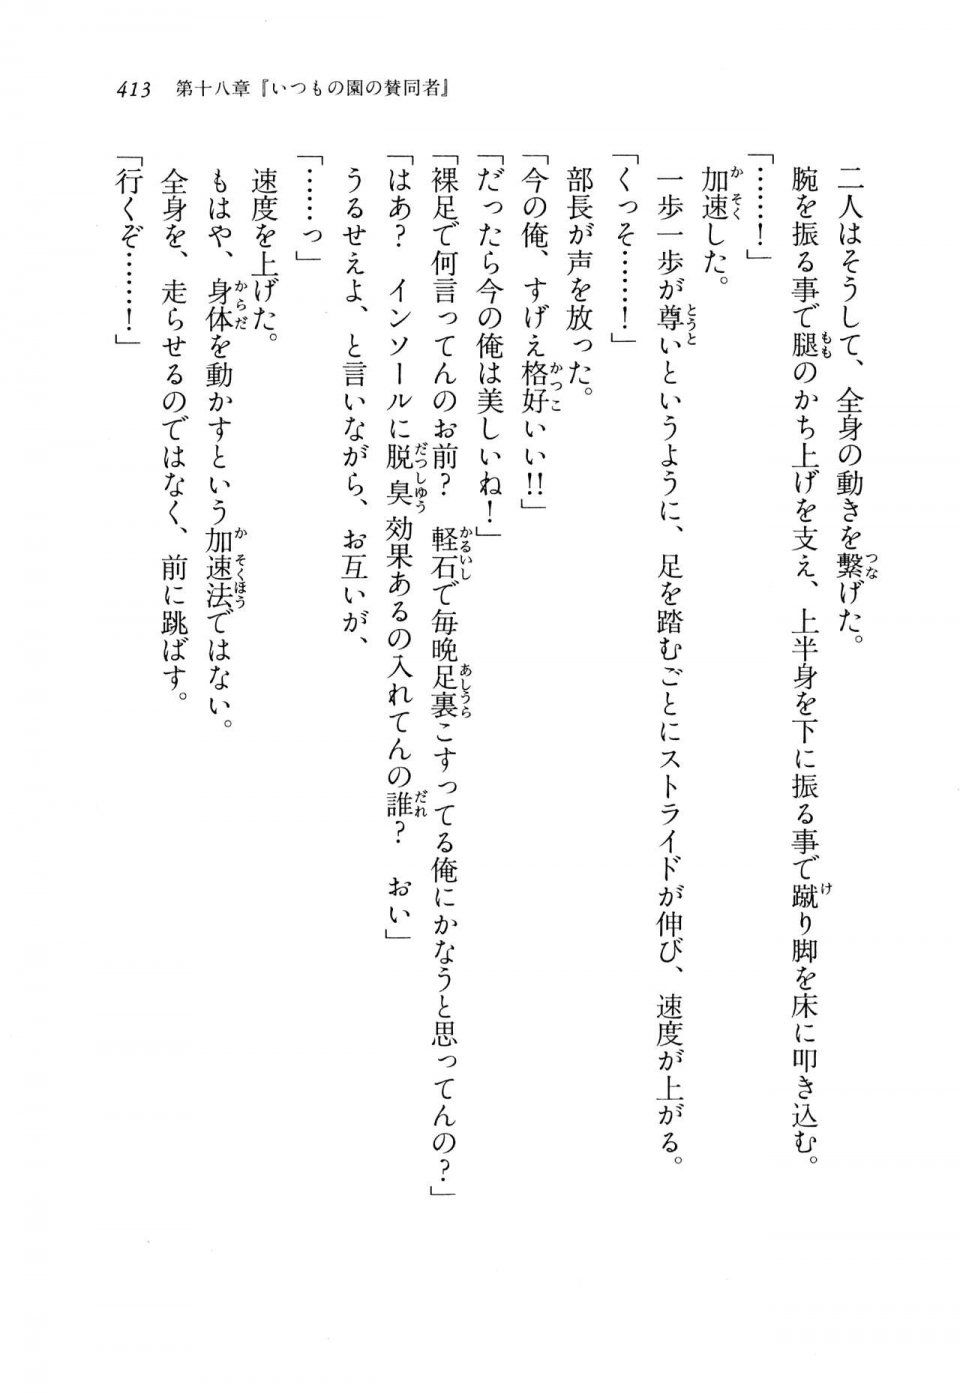 Kyoukai Senjou no Horizon BD Special Mininovel Vol 8(4B) - Photo #417